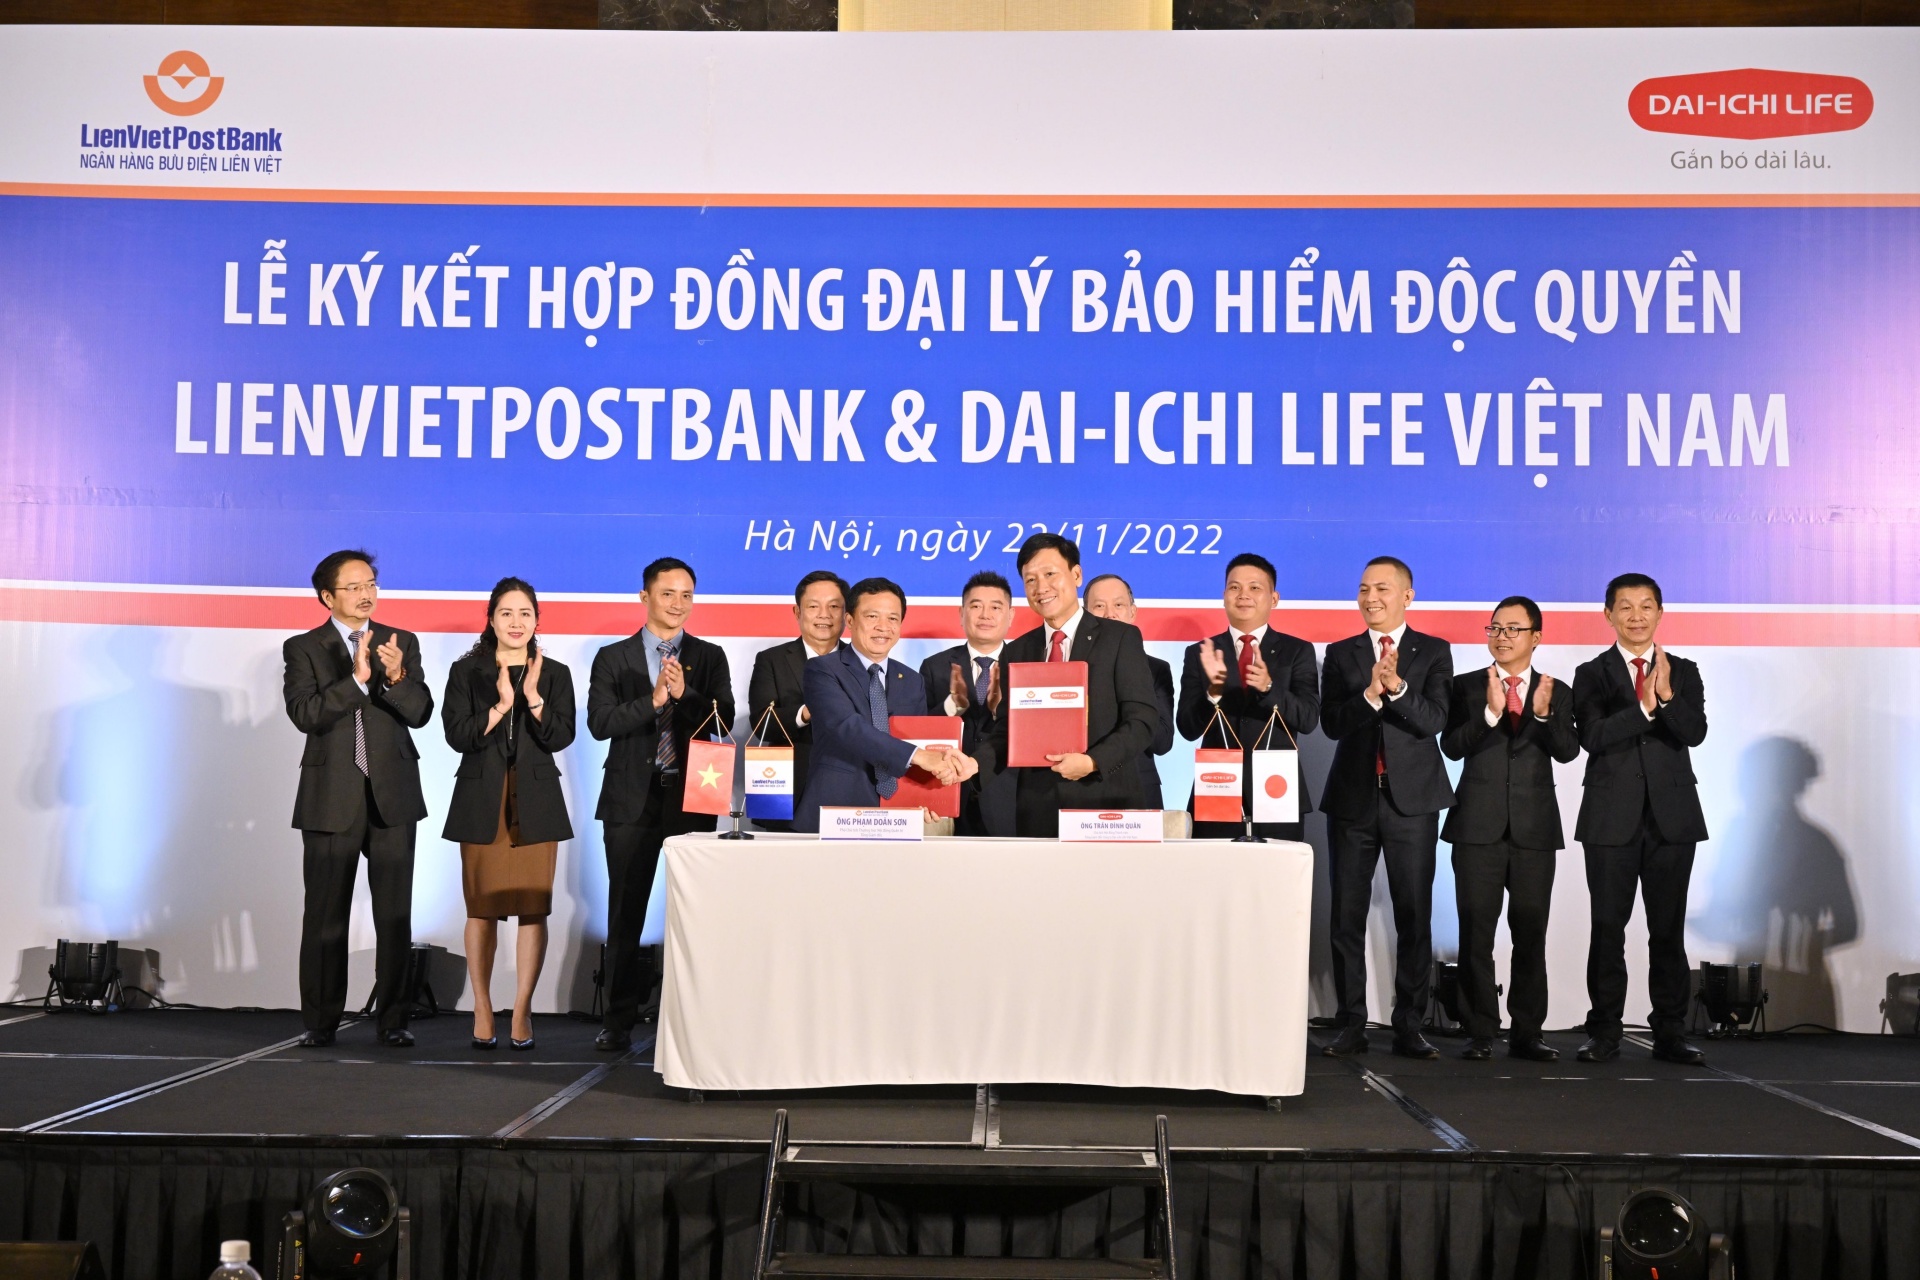 LienVietPostBank and Dai-ichi Life Vietnam sign exclusive 15-year agreement